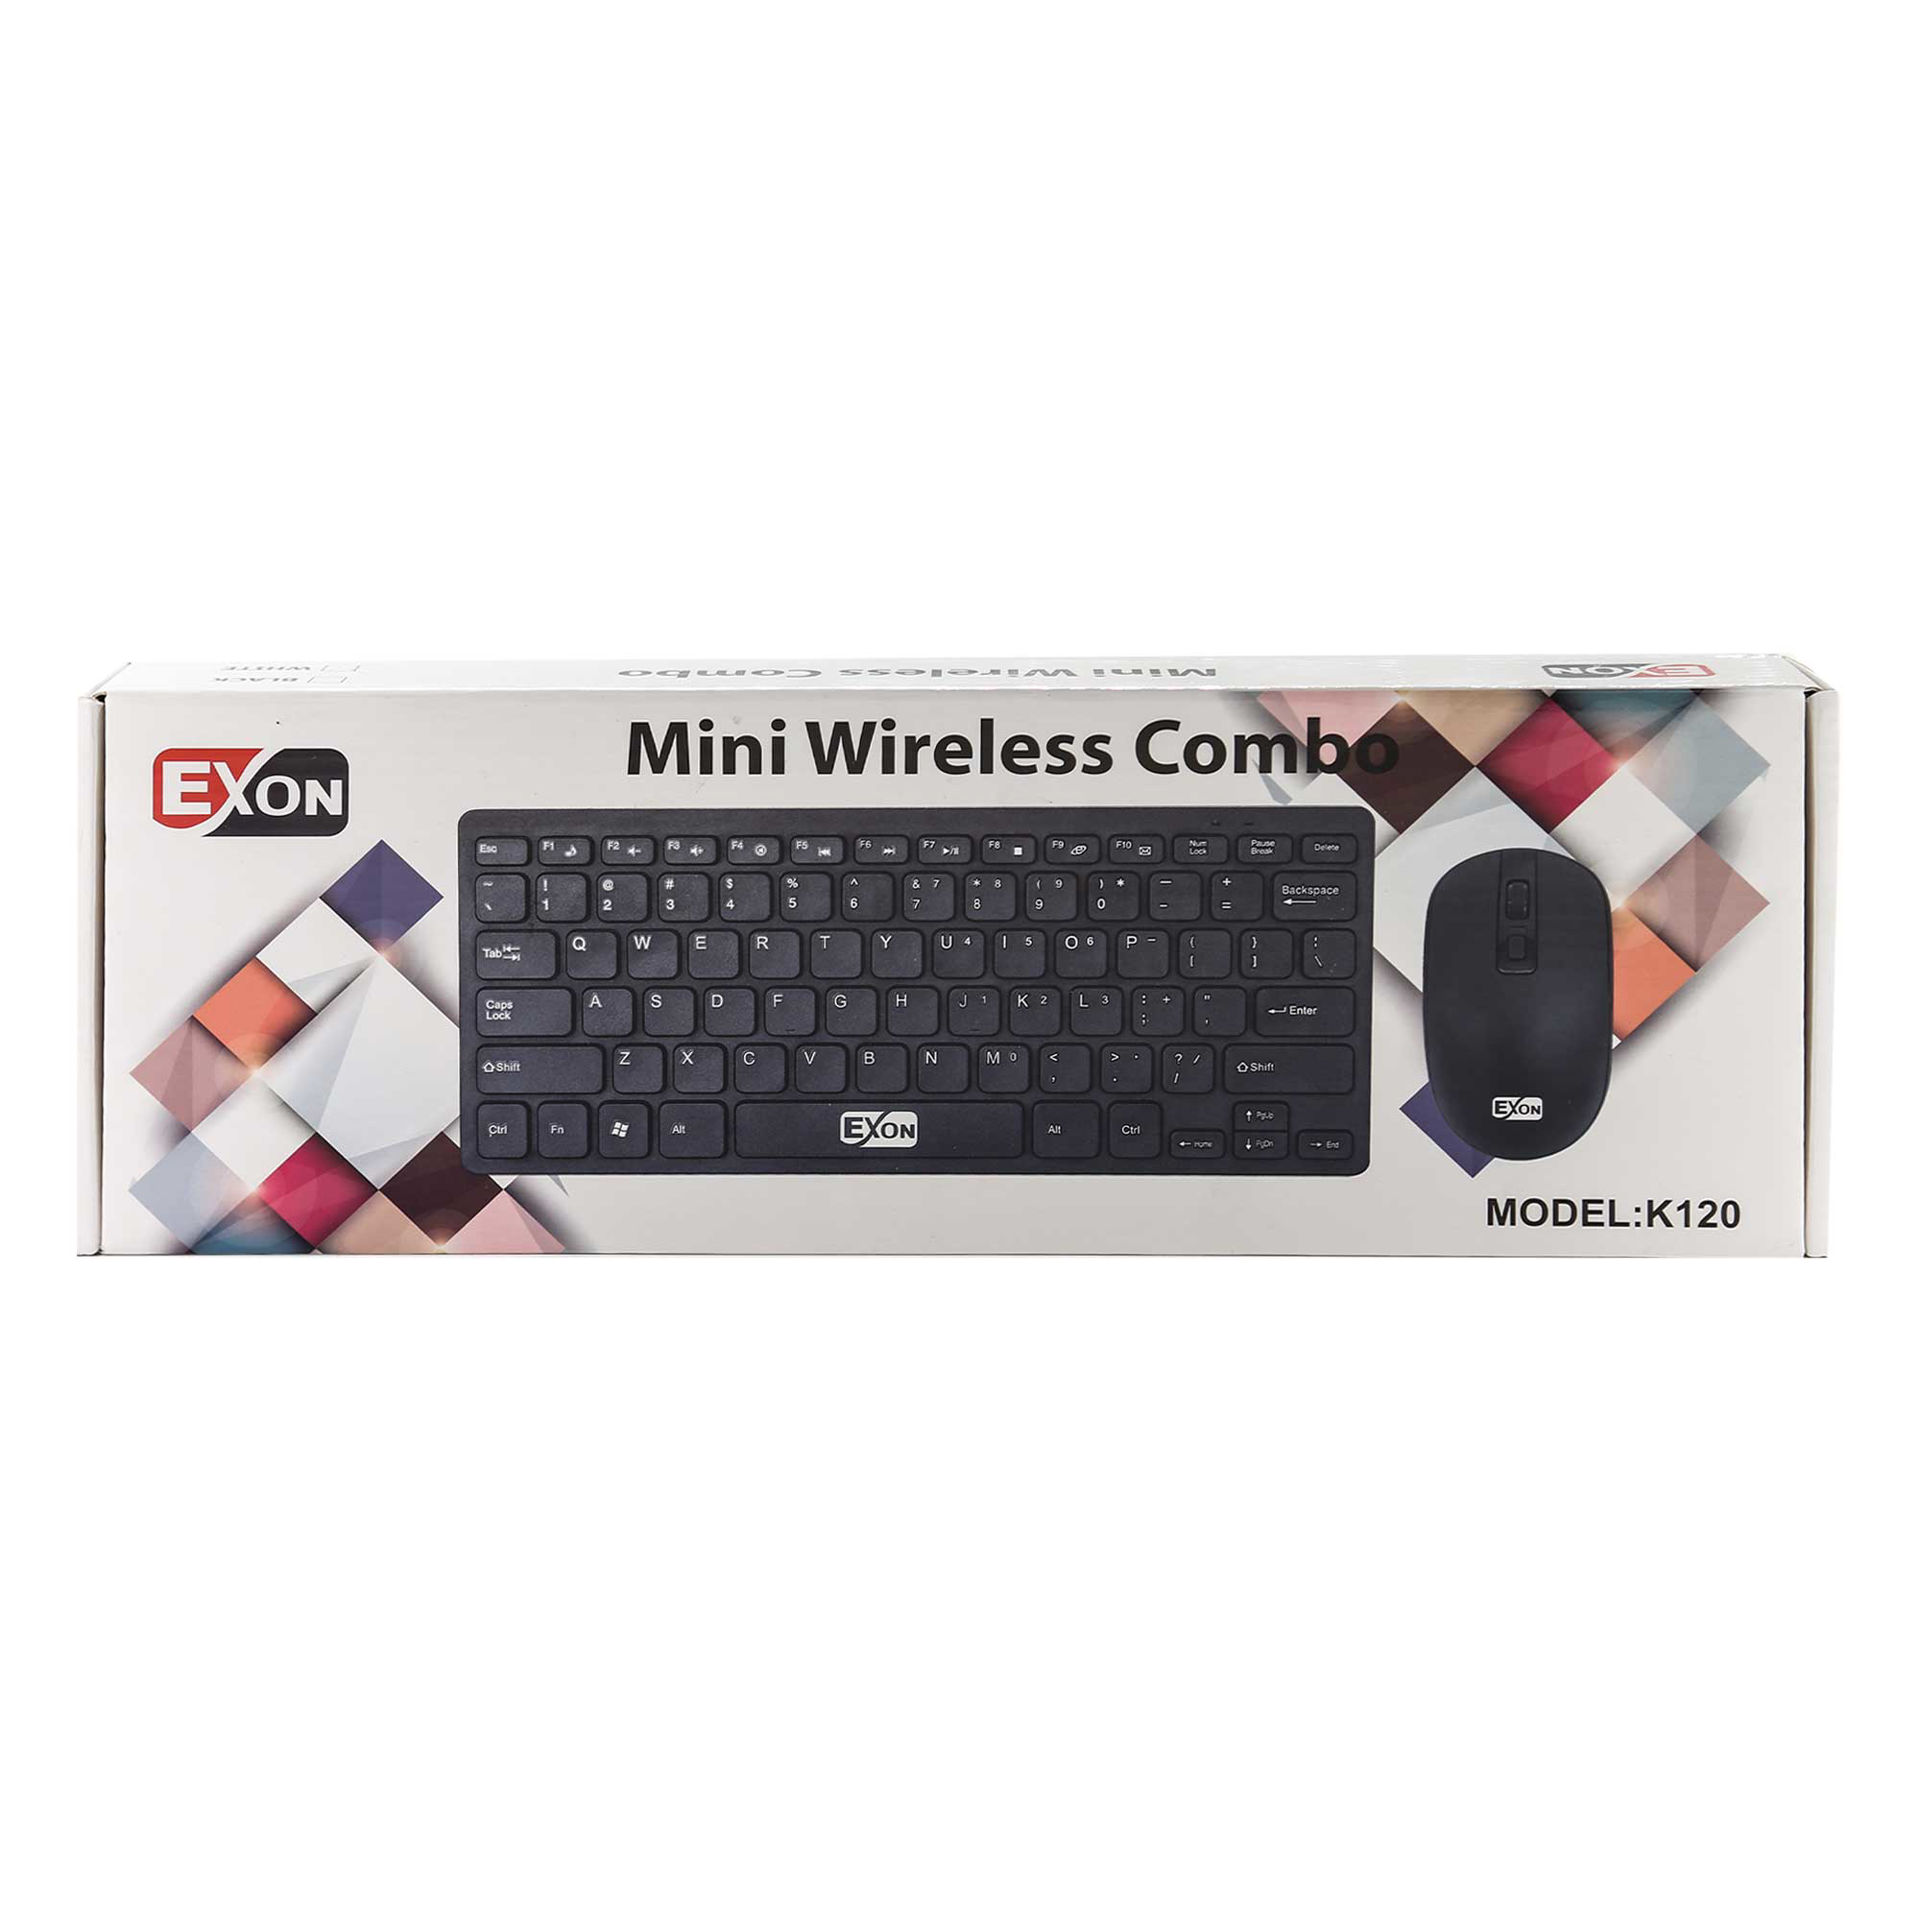 Exon K-120 Mini Wireless Keyboard And Mouse